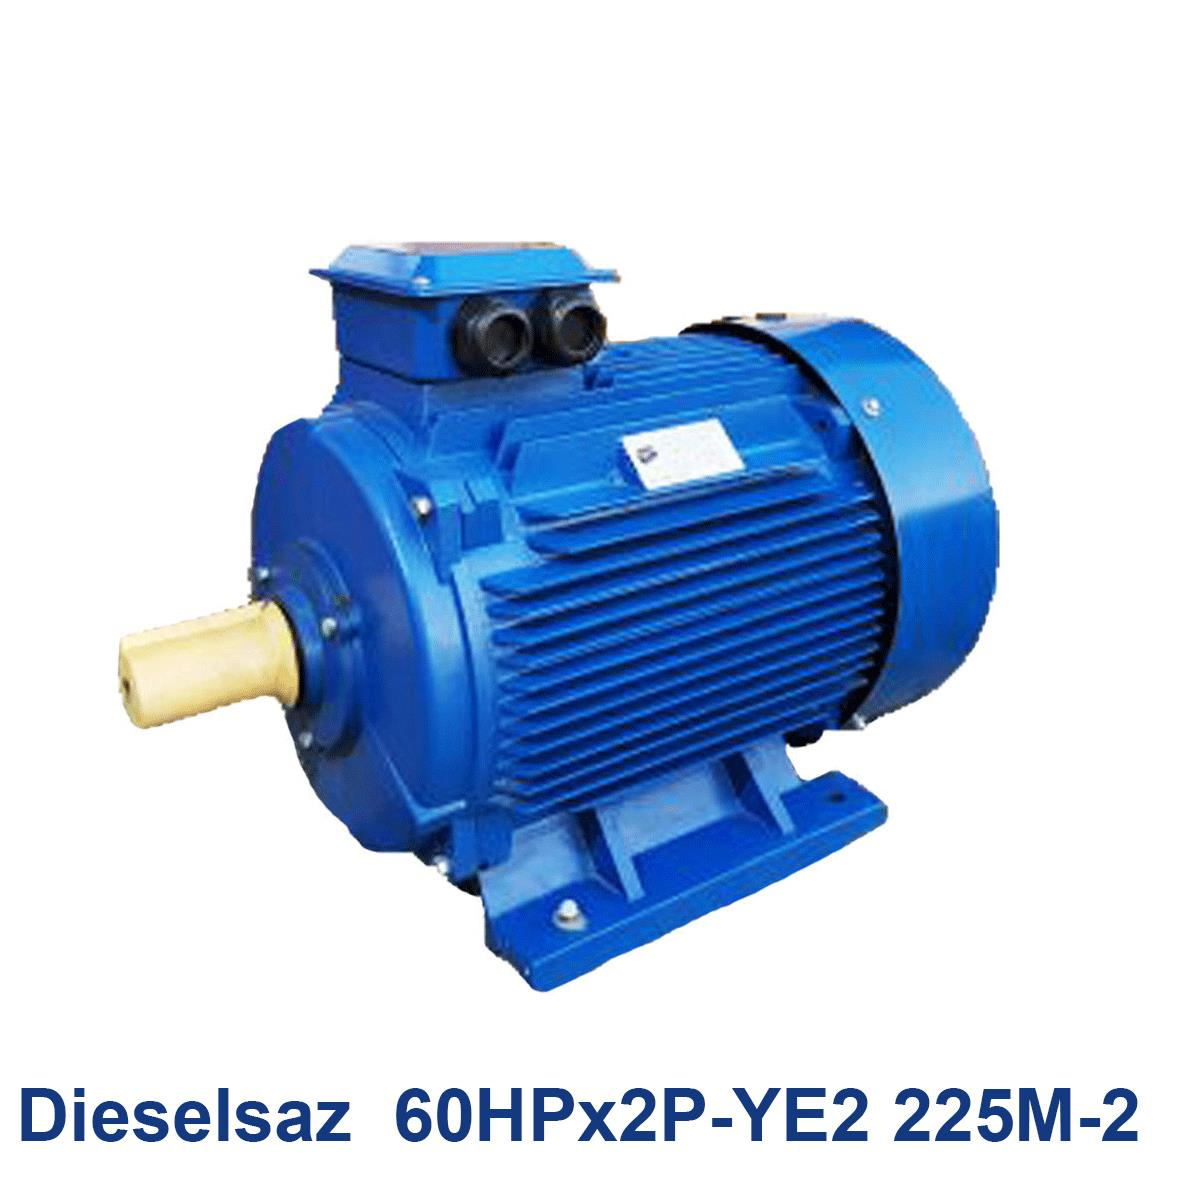 Dieselsaz--60HPx2P-YE2-225M-2